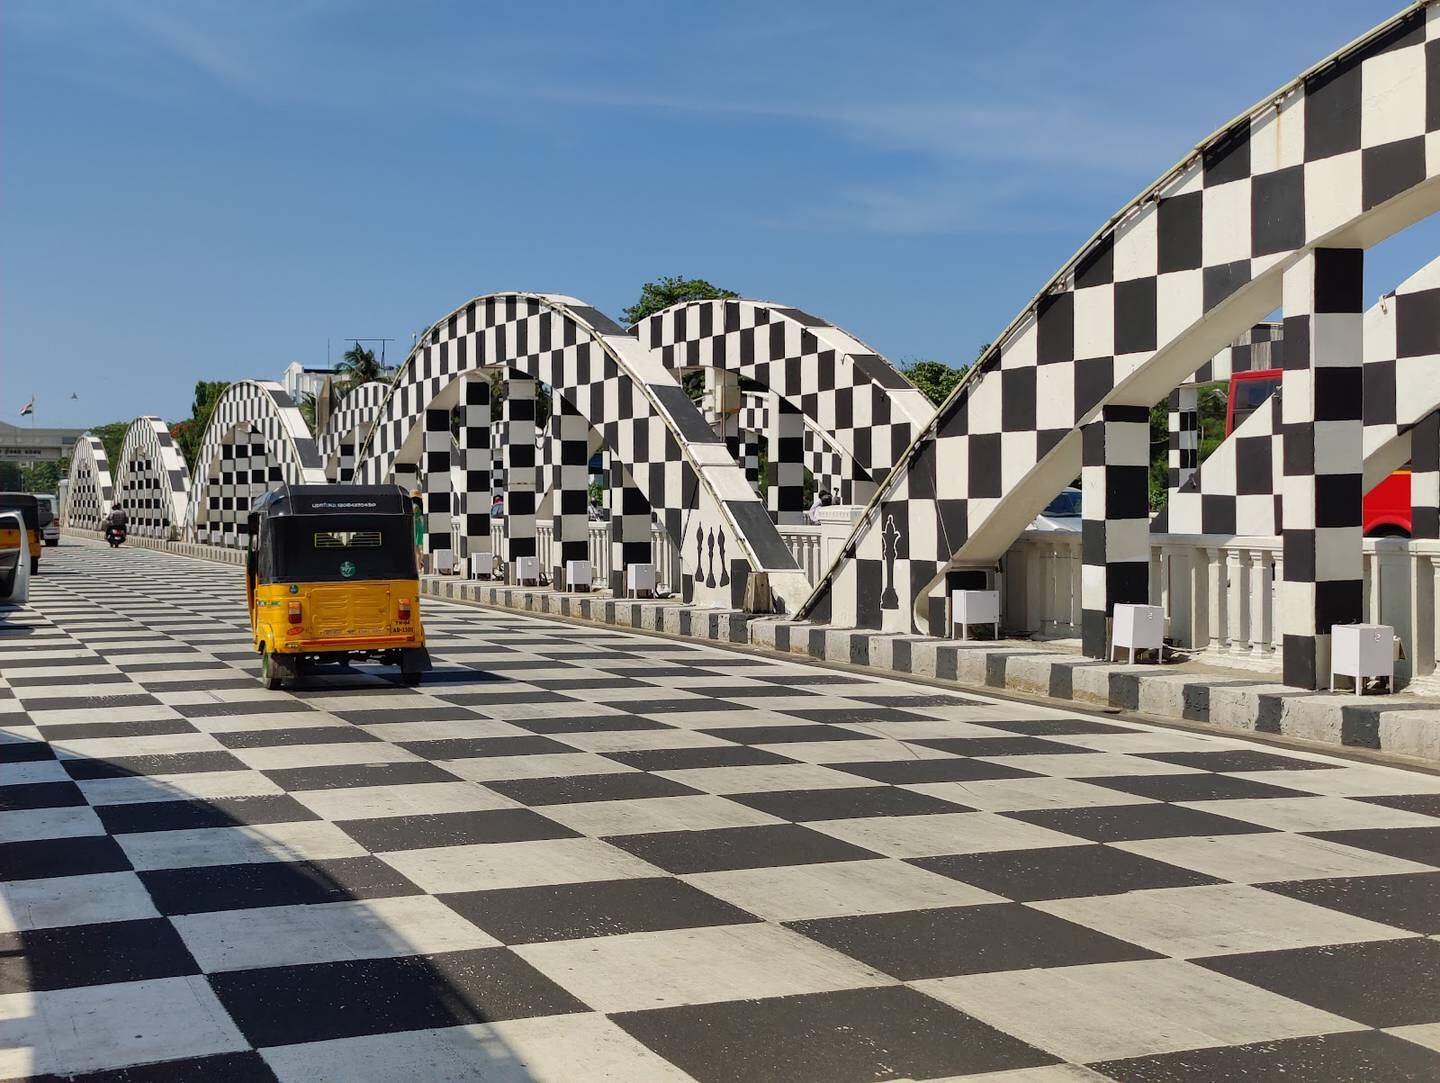 Chennai's Napier Bridge has been decorated like a chess board. Photo: Kalpana Sunder